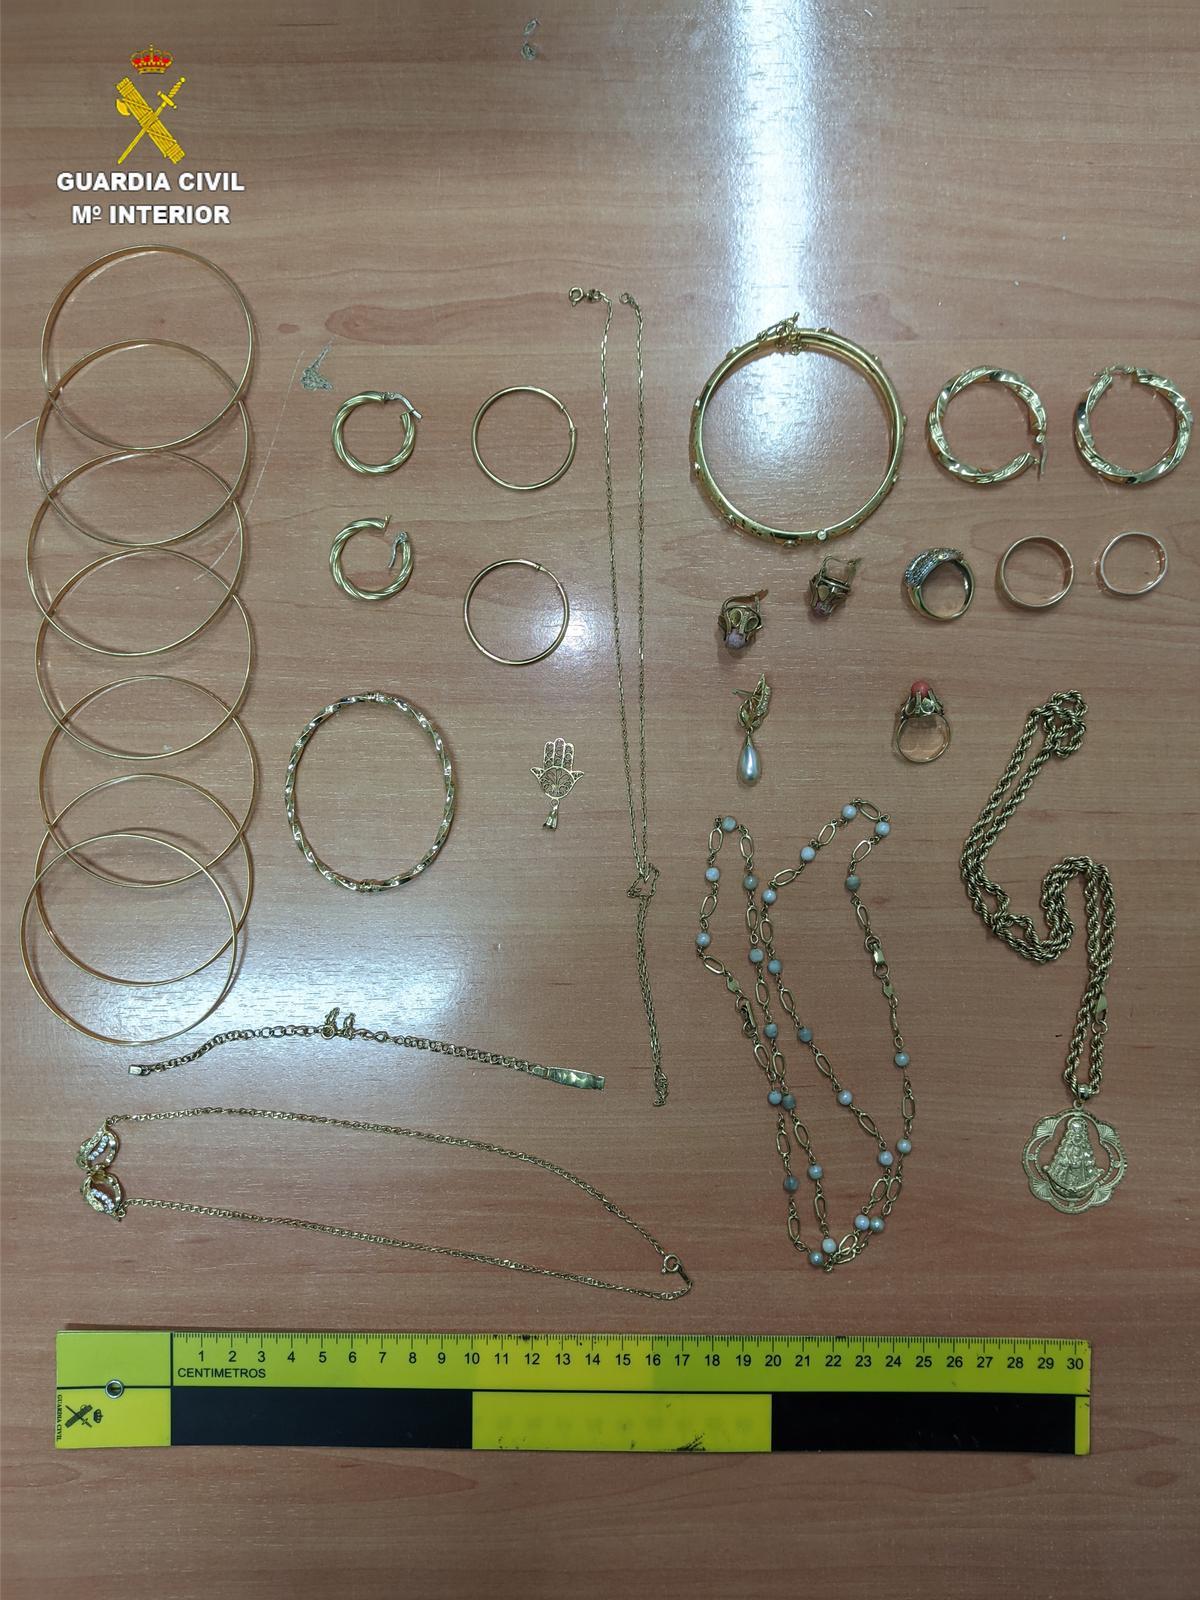 Imagen de las joyas recuperadas por la Guardia Civil.